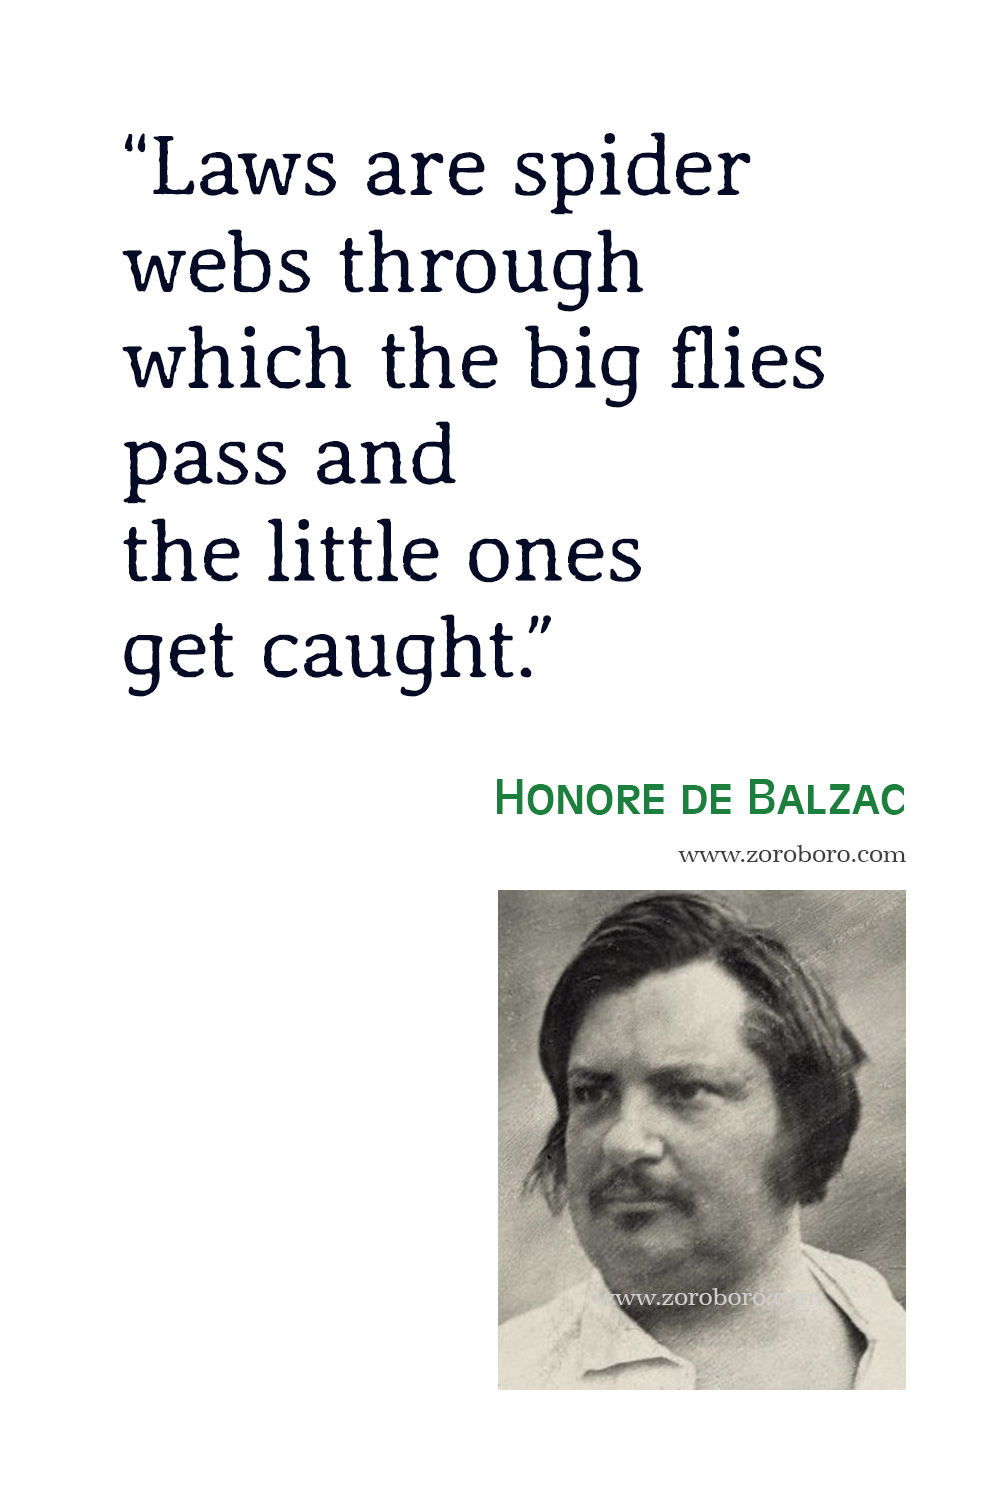 Honore de Balzac Quotes, Honore de Balzac Père Goriot Quotes, Honoré de Balzac Books, Honoré de Balzac Famous Works, Feelings, Heart, Husband, Literature, Love, Passion, Virtue.